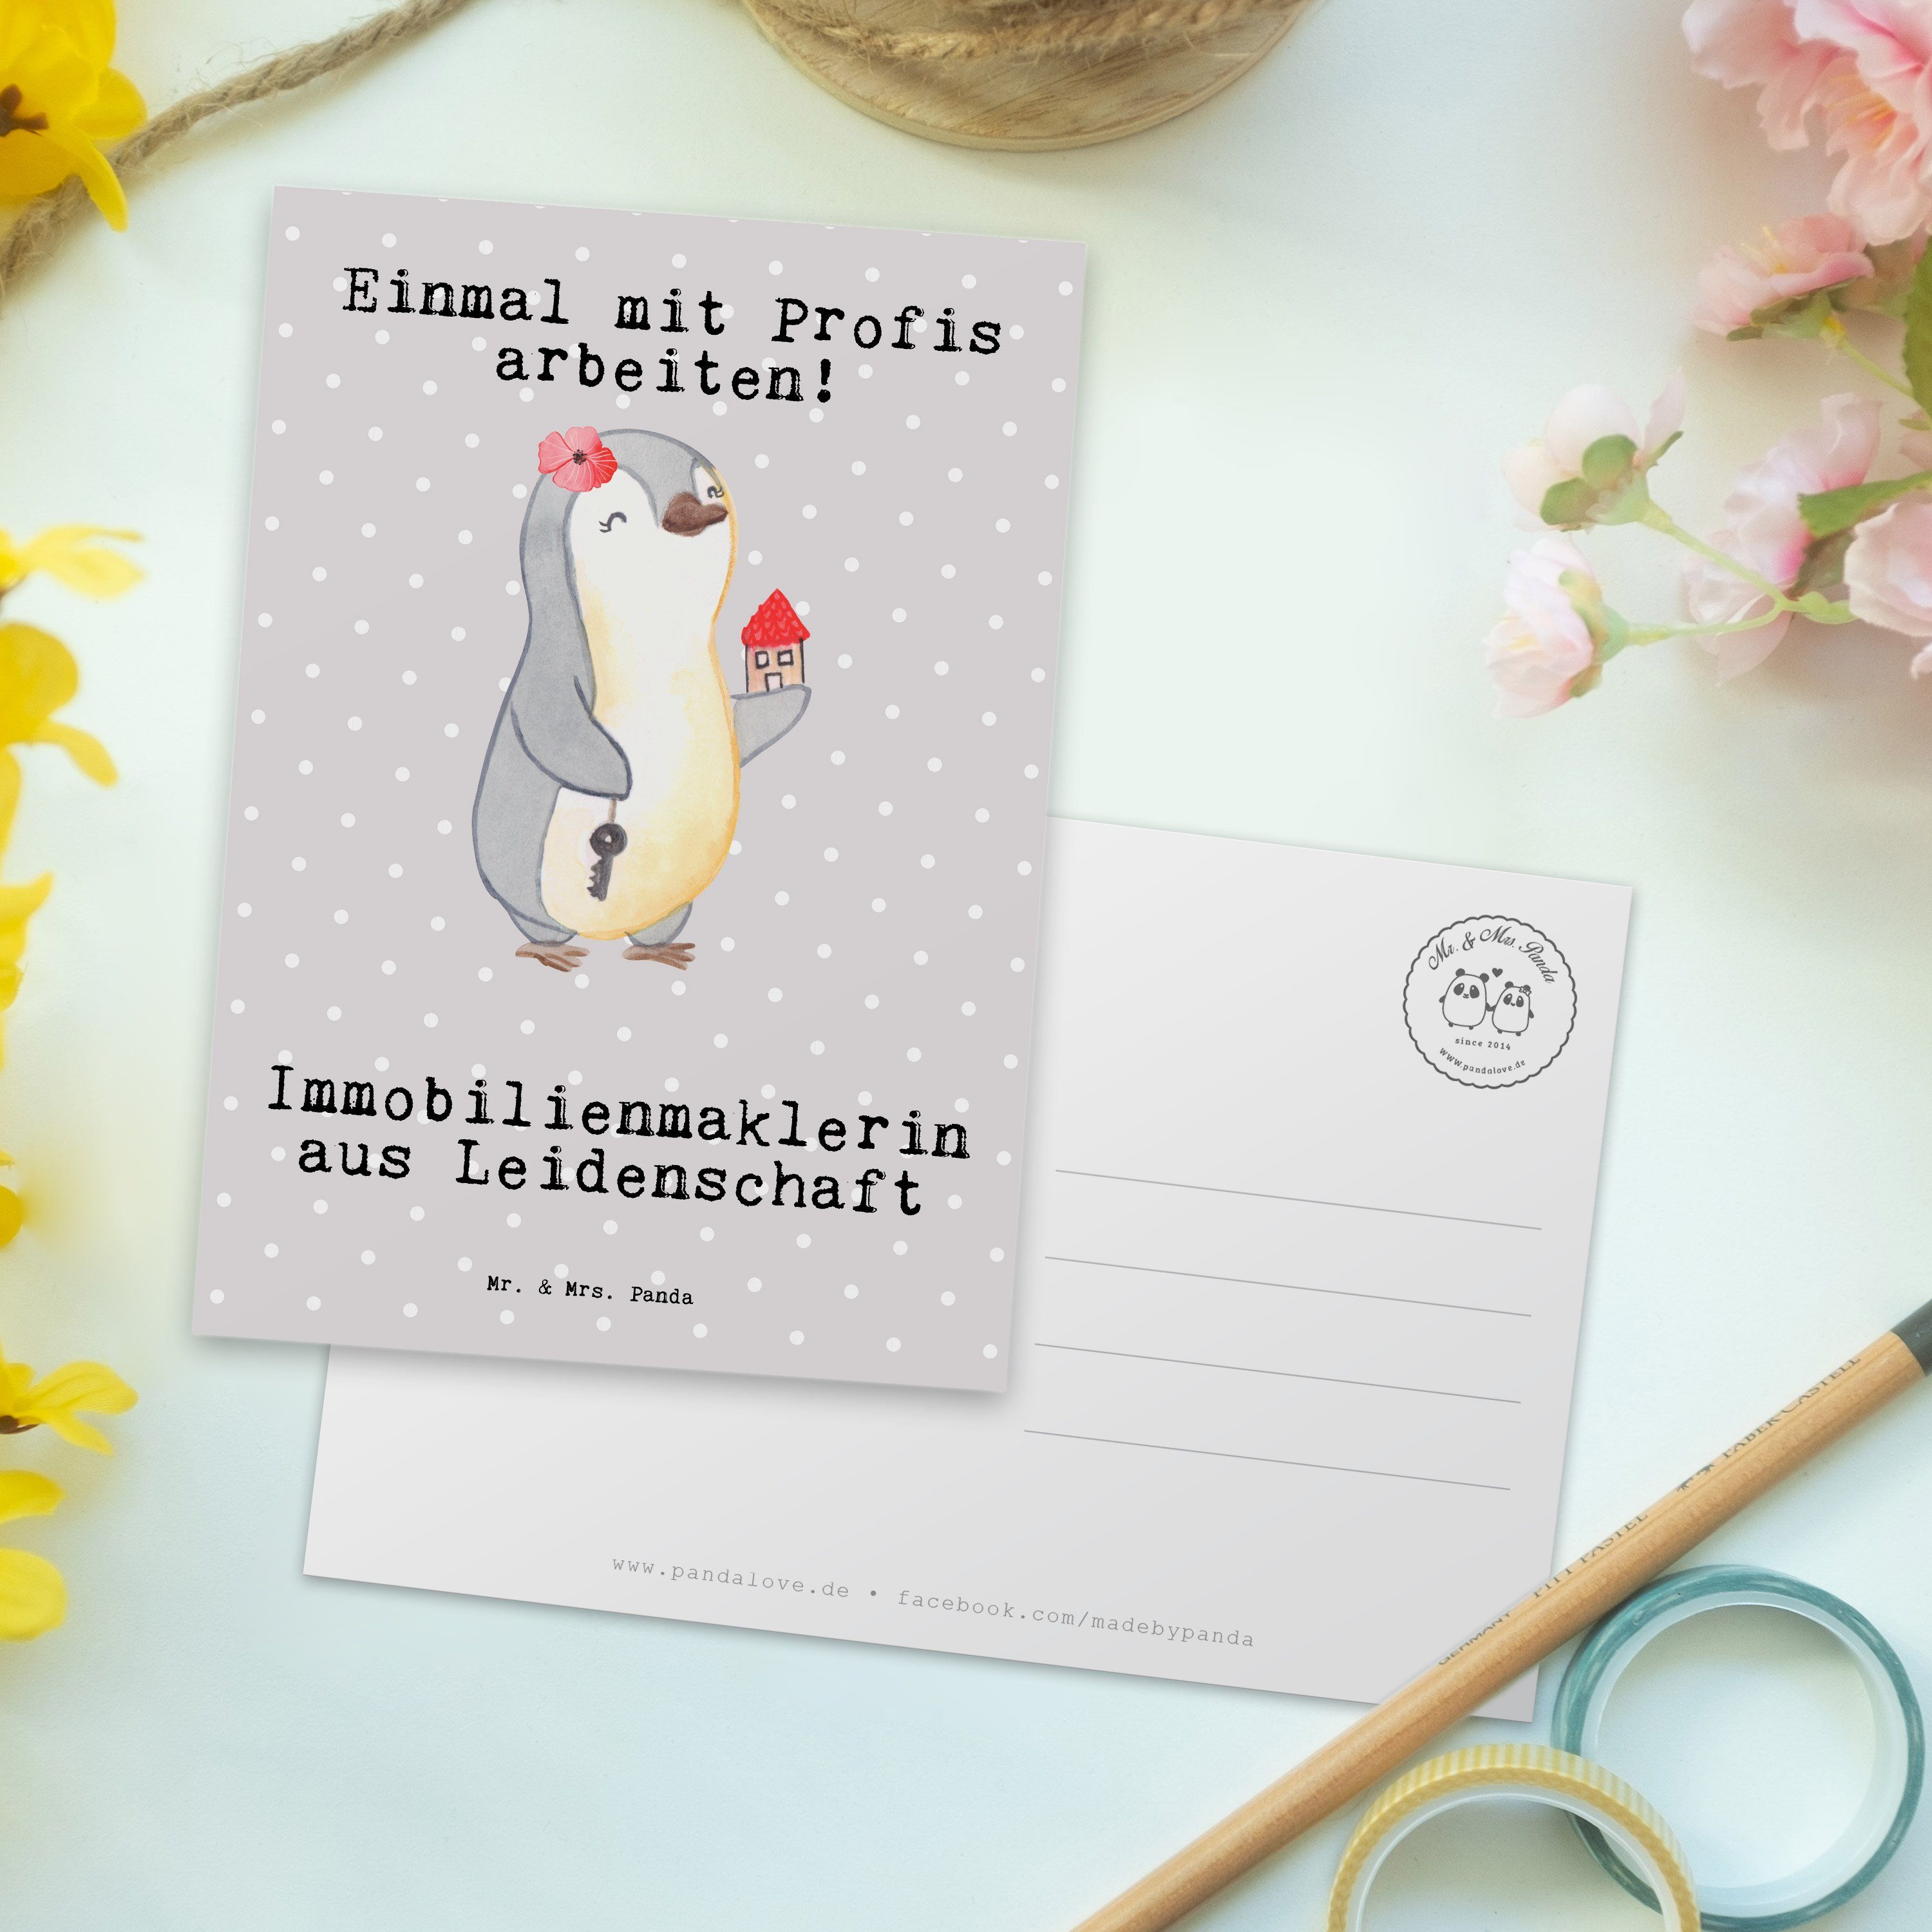 Mr. & Mrs. Panda Postkarte Immobilienmaklerin aus Leidenschaft - Grau Pastell - Geschenk, Dankes